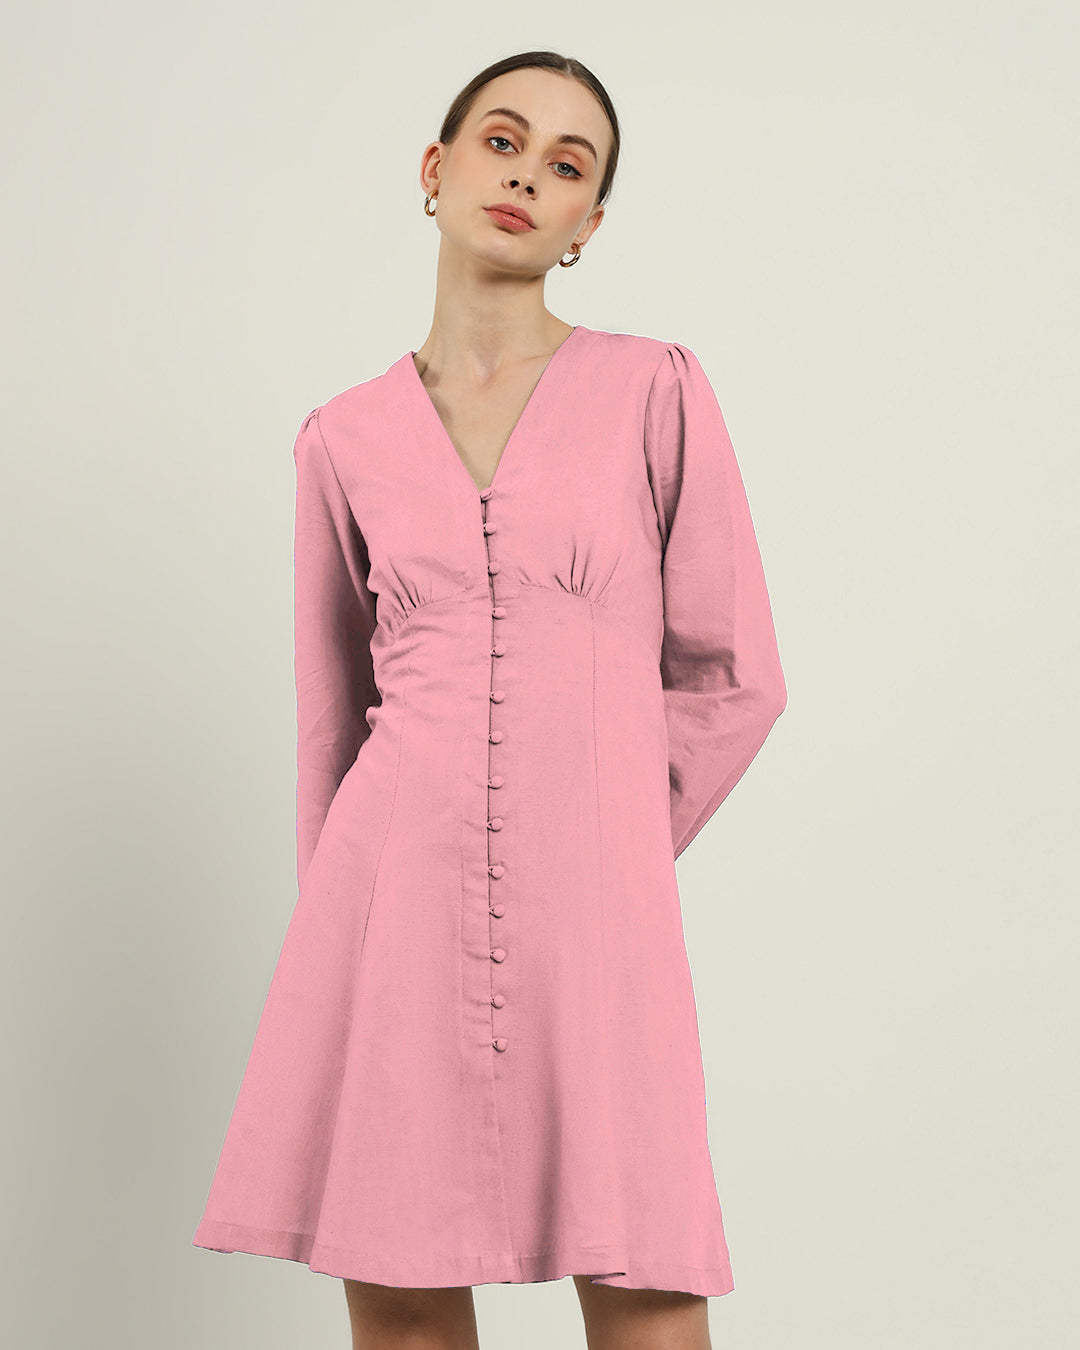 The Dafni Fondant Pink Cotton Dress